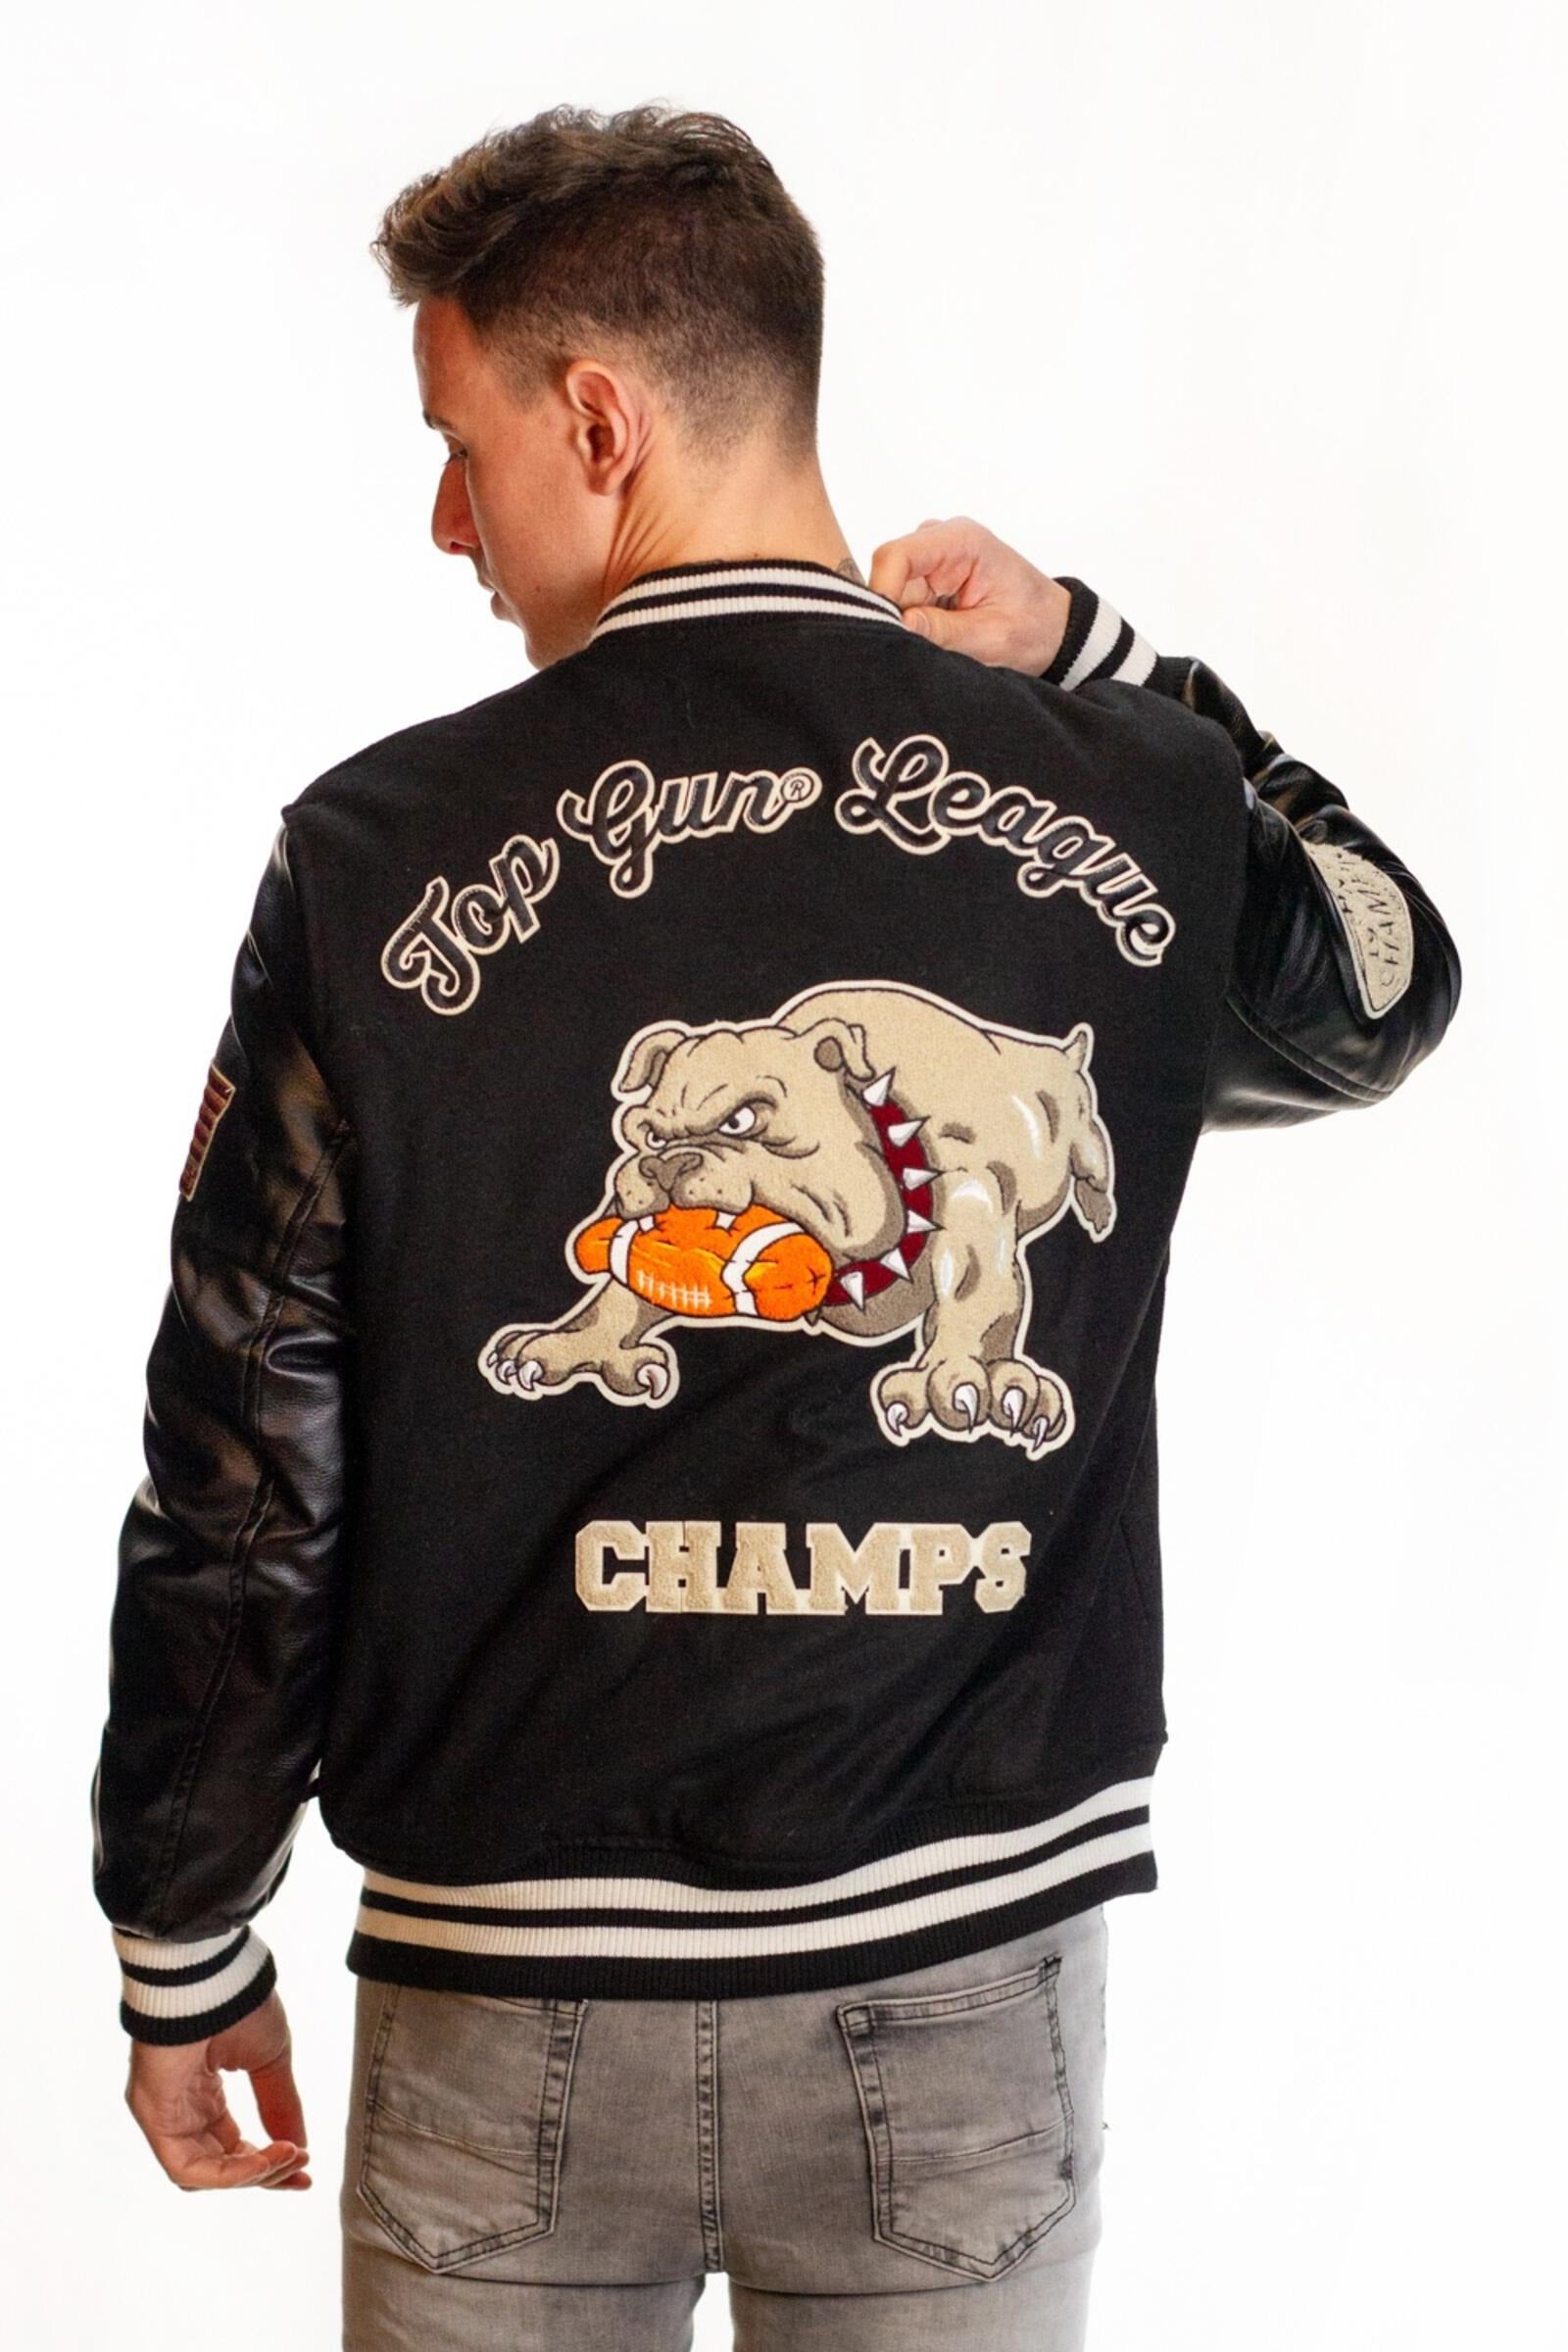 Top Gun Bulldog Varsity Jacket